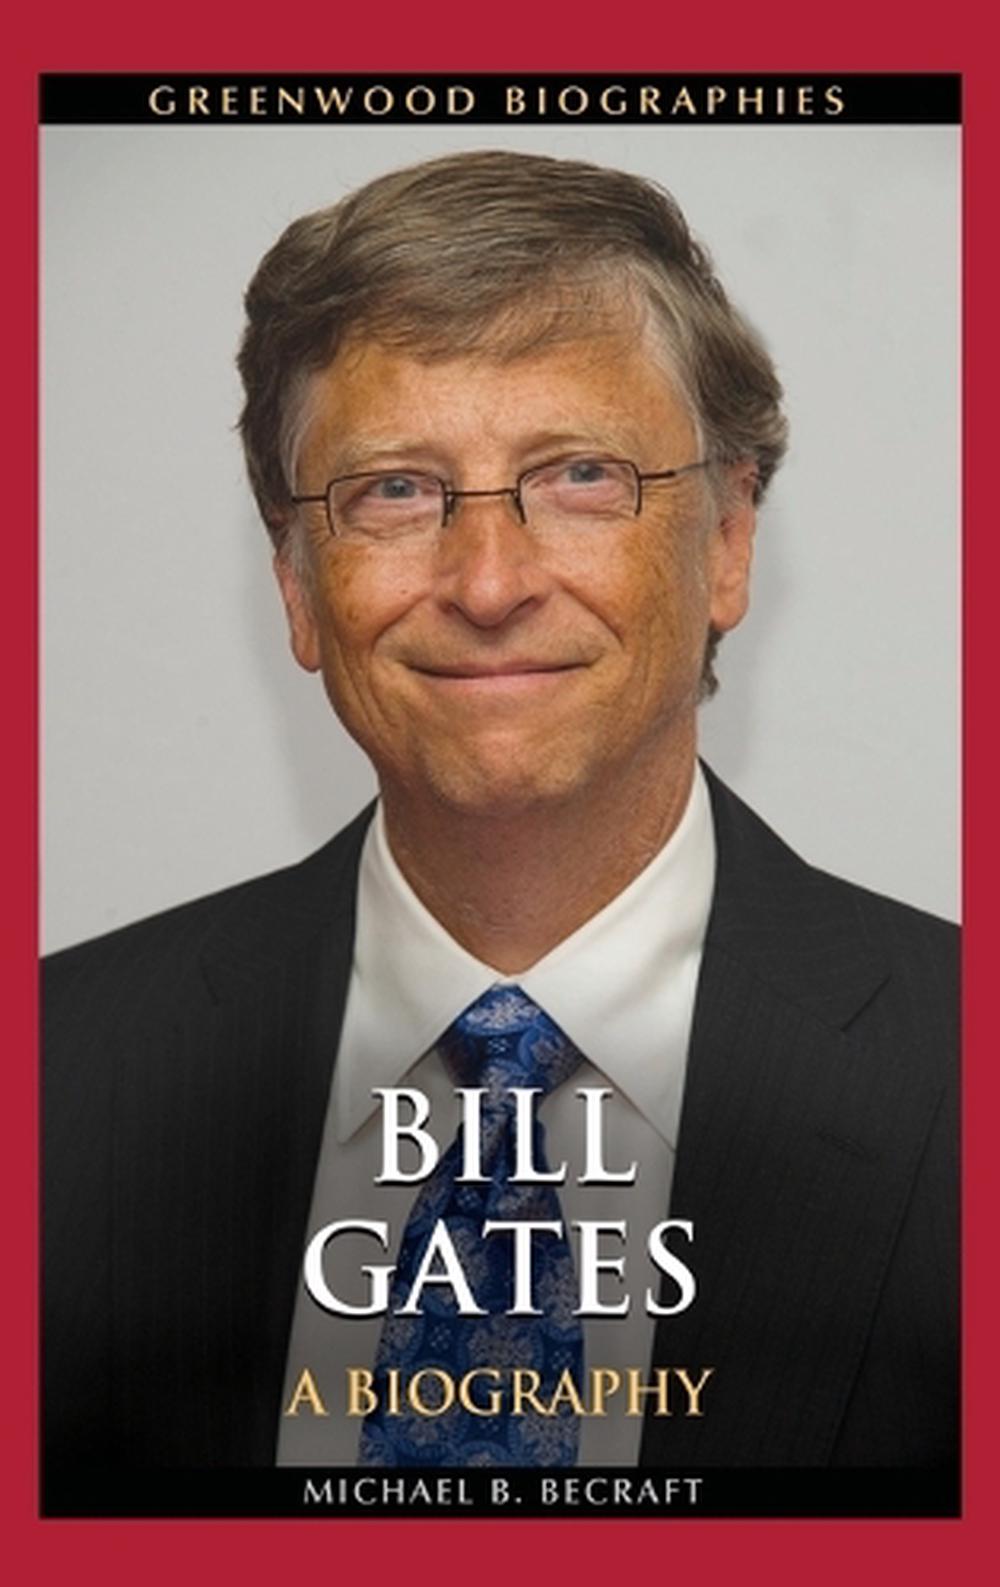 book on bill gates biography